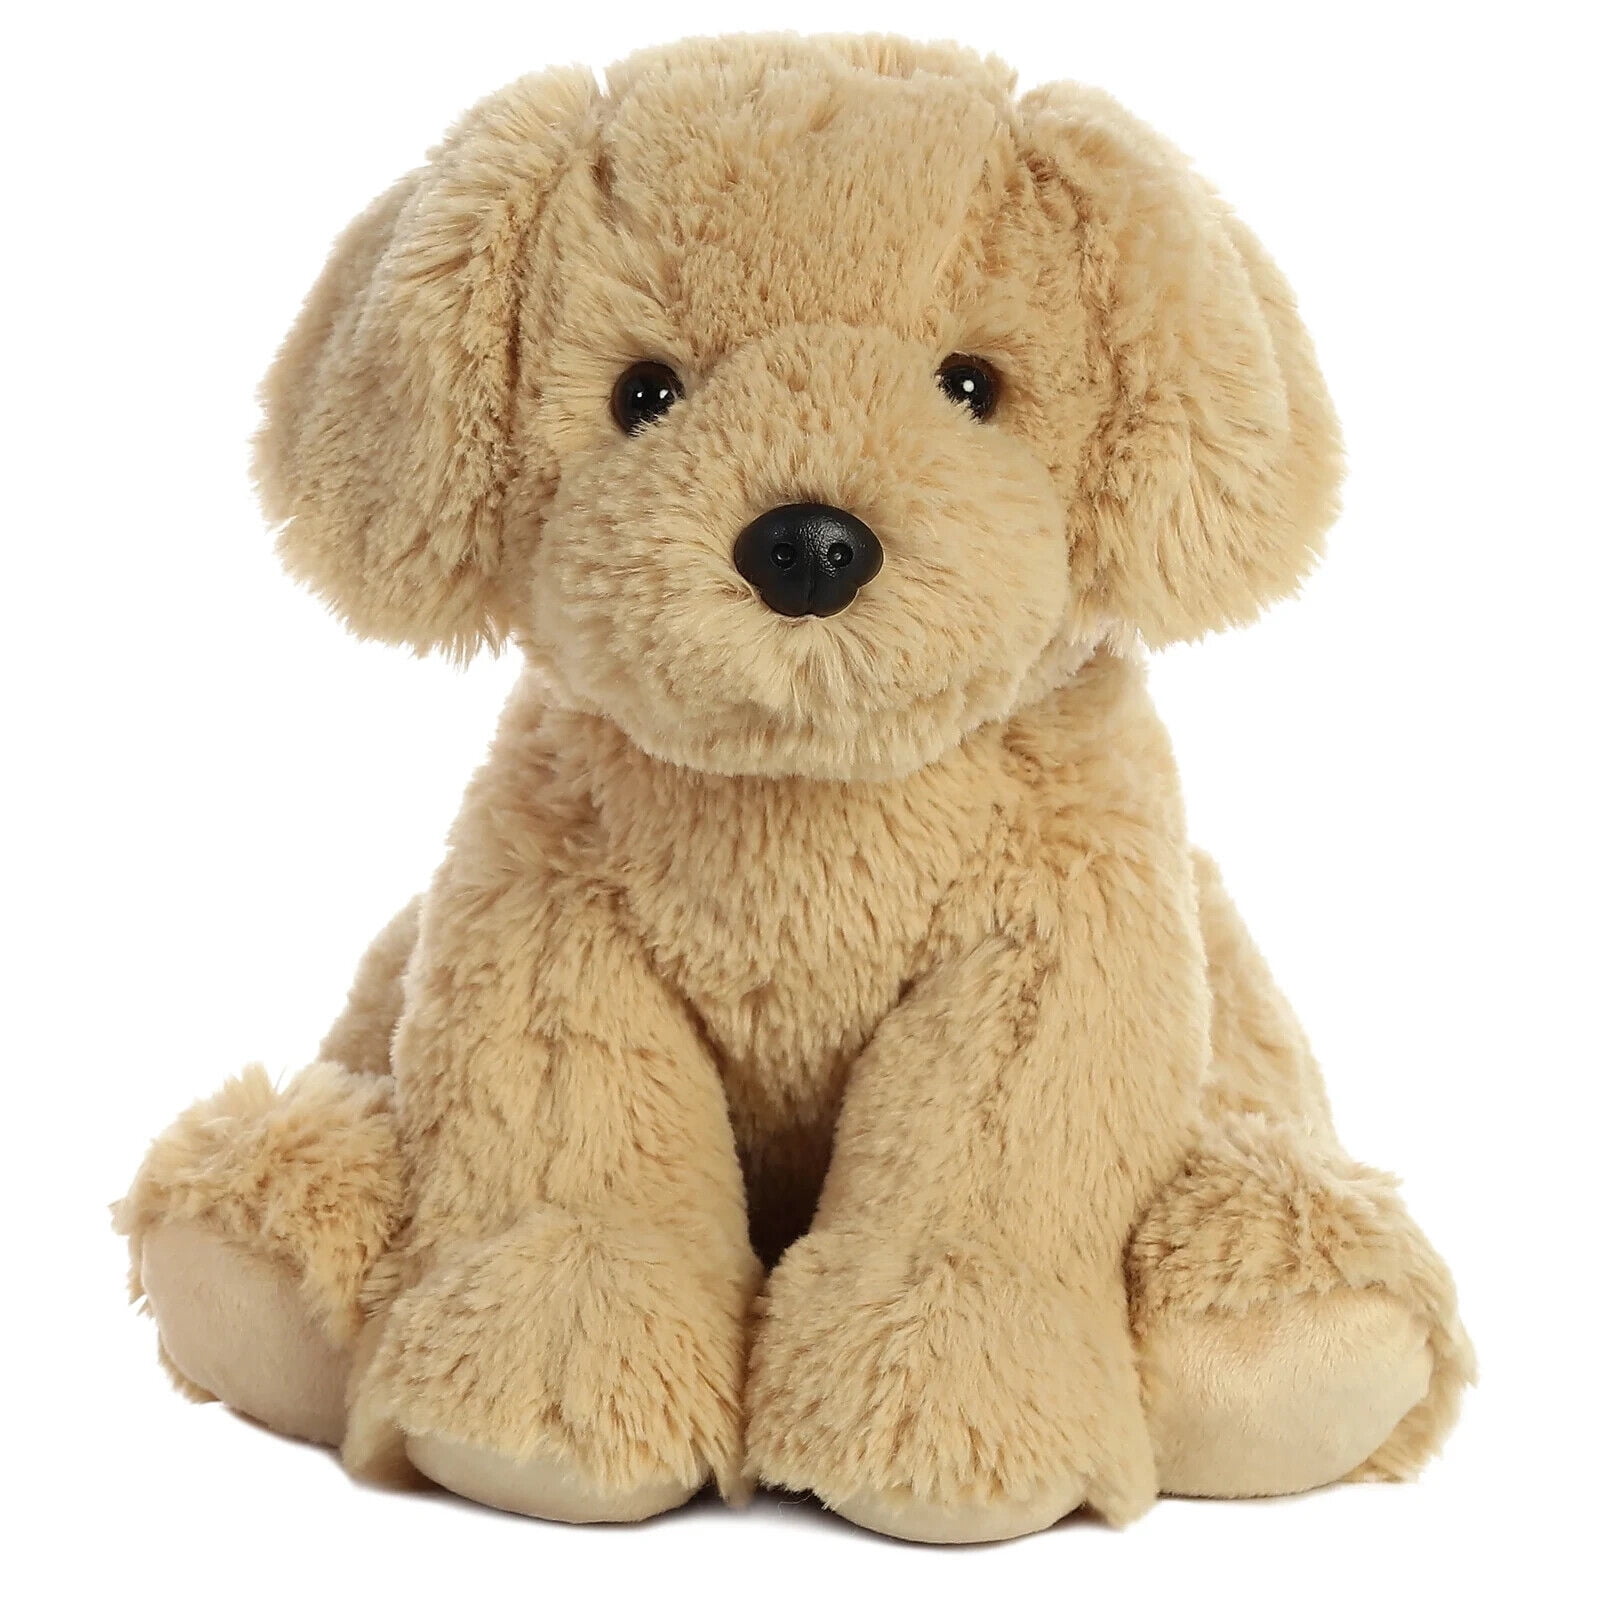 GOLDEN LAB Puppy Dog Stuffed Animal Plush, 14 Tall, by Aurora 